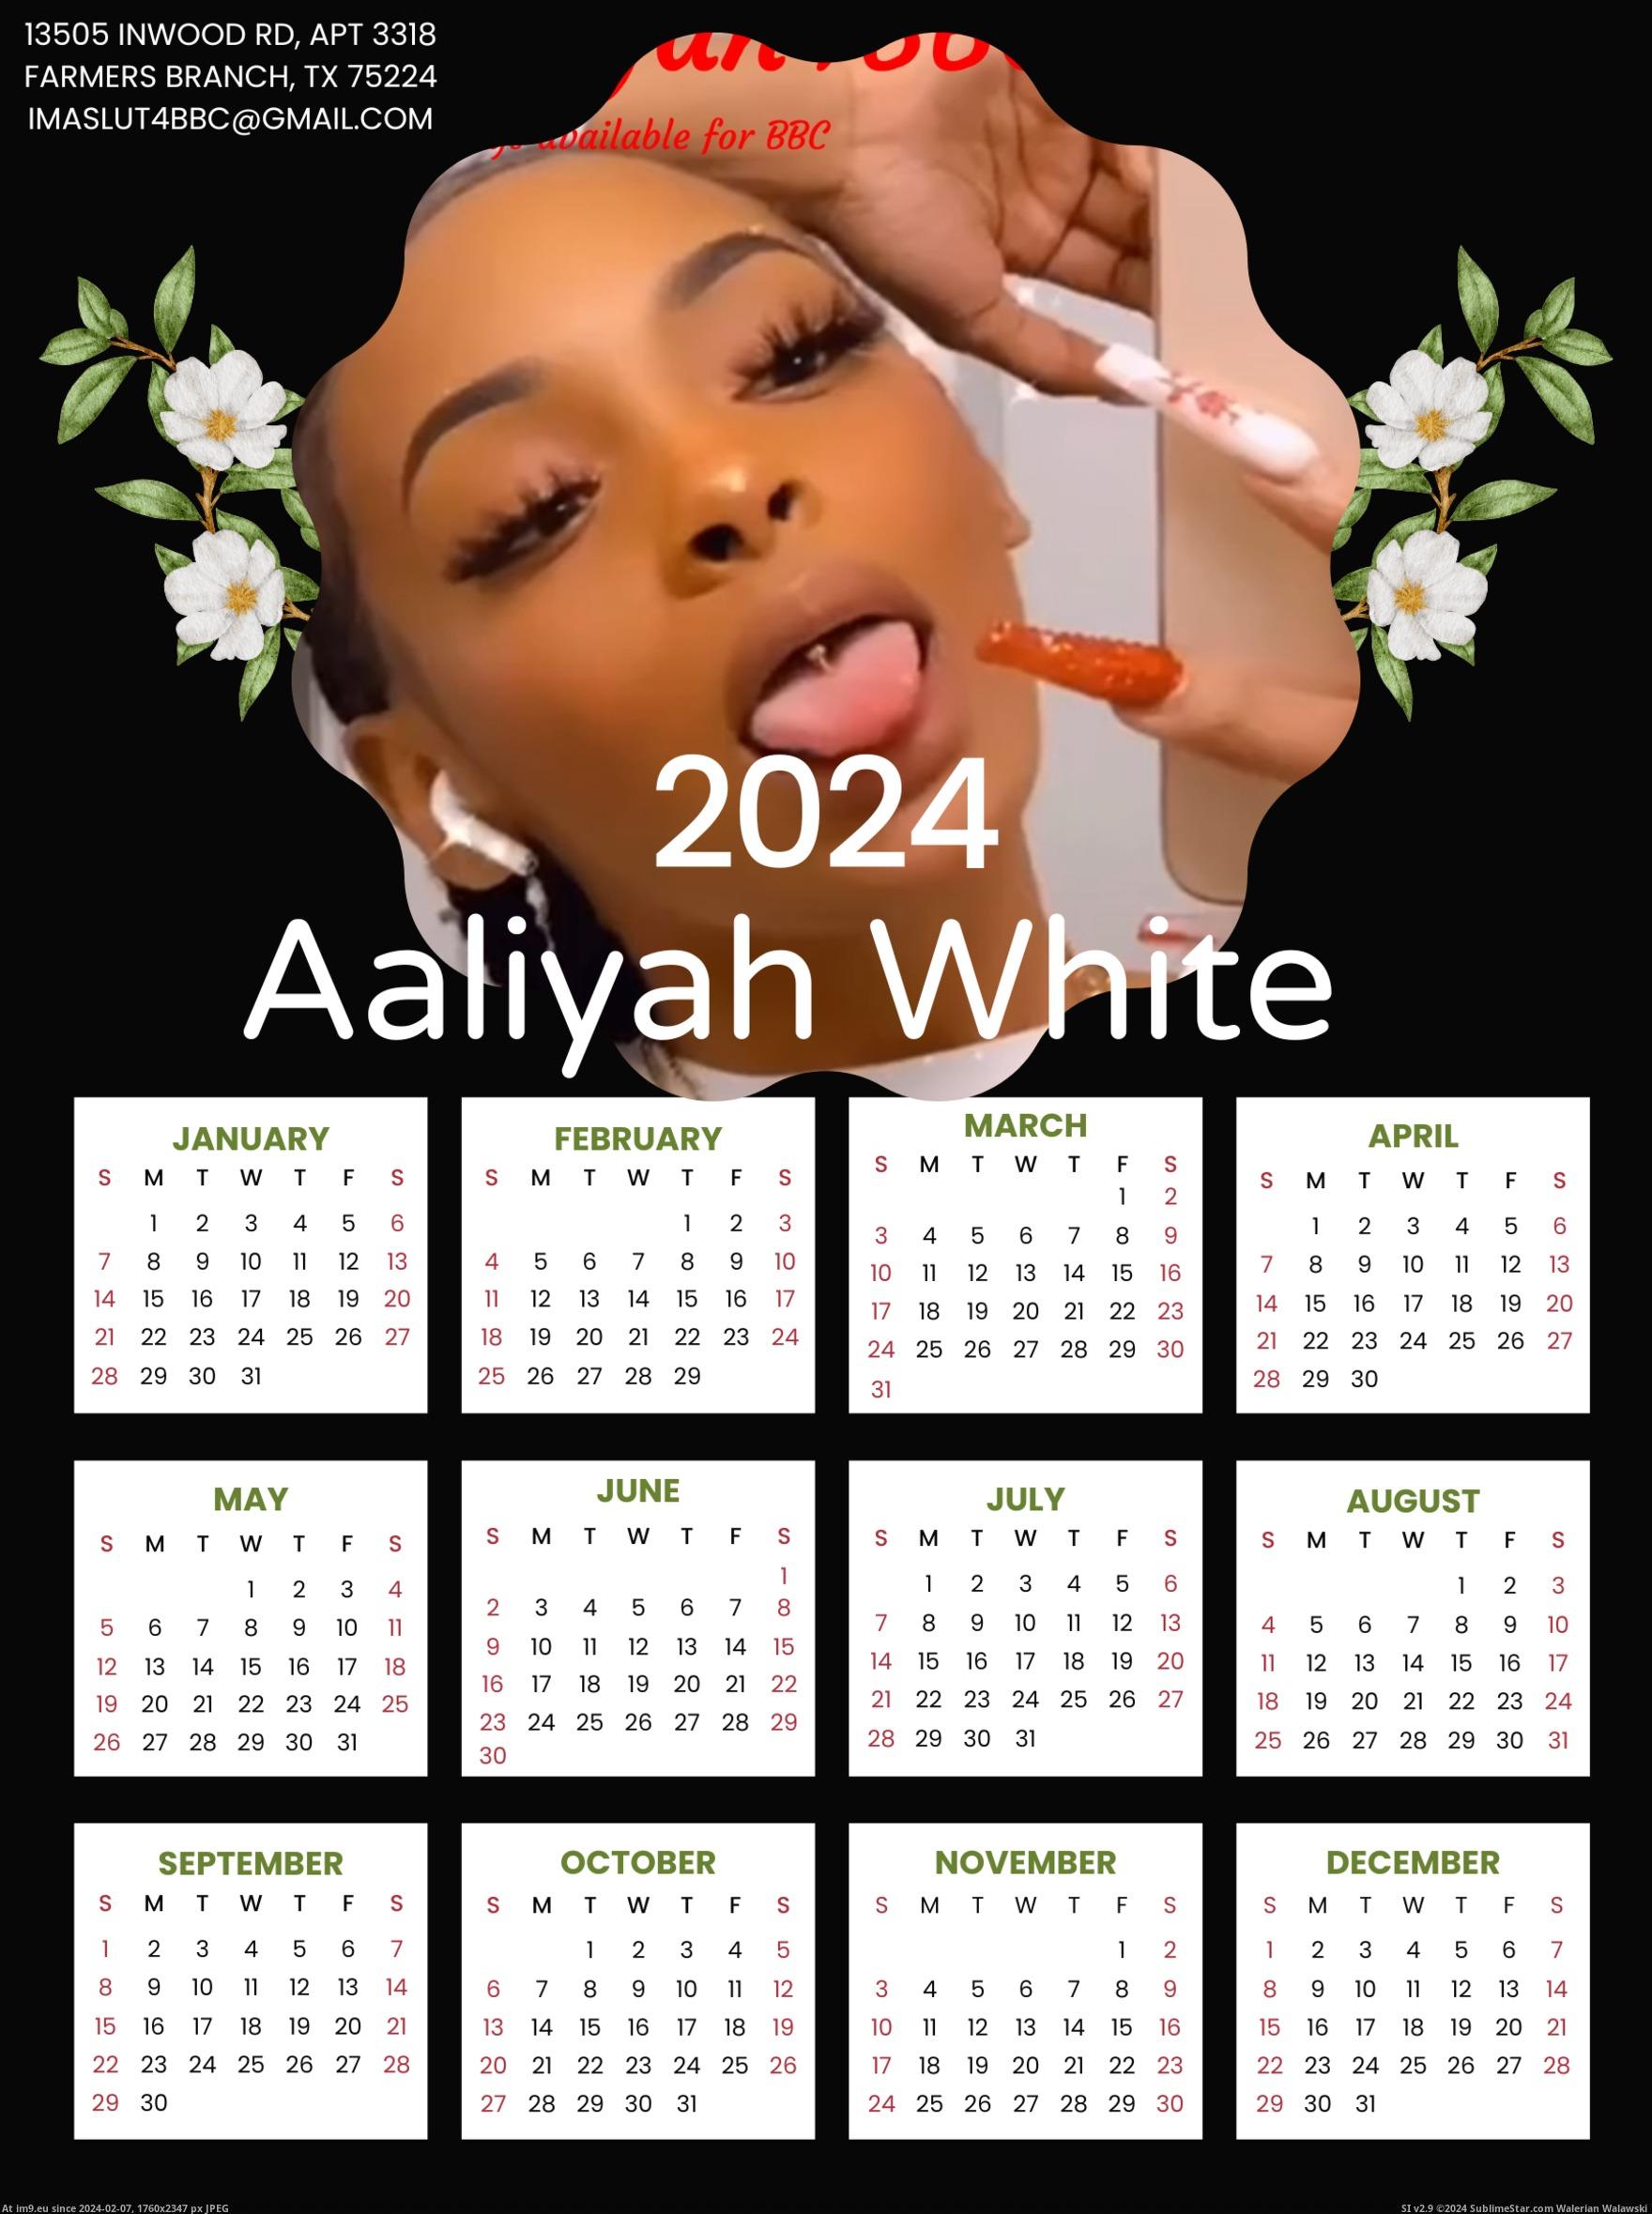 #Porn #Tits #Photo #Calendar #Beige #Ebony #Nudes #Green Beige And Green Photo 2024 Calendar (8) Pic. (Image of album Aaliyah White Free Use Nigger Slut))